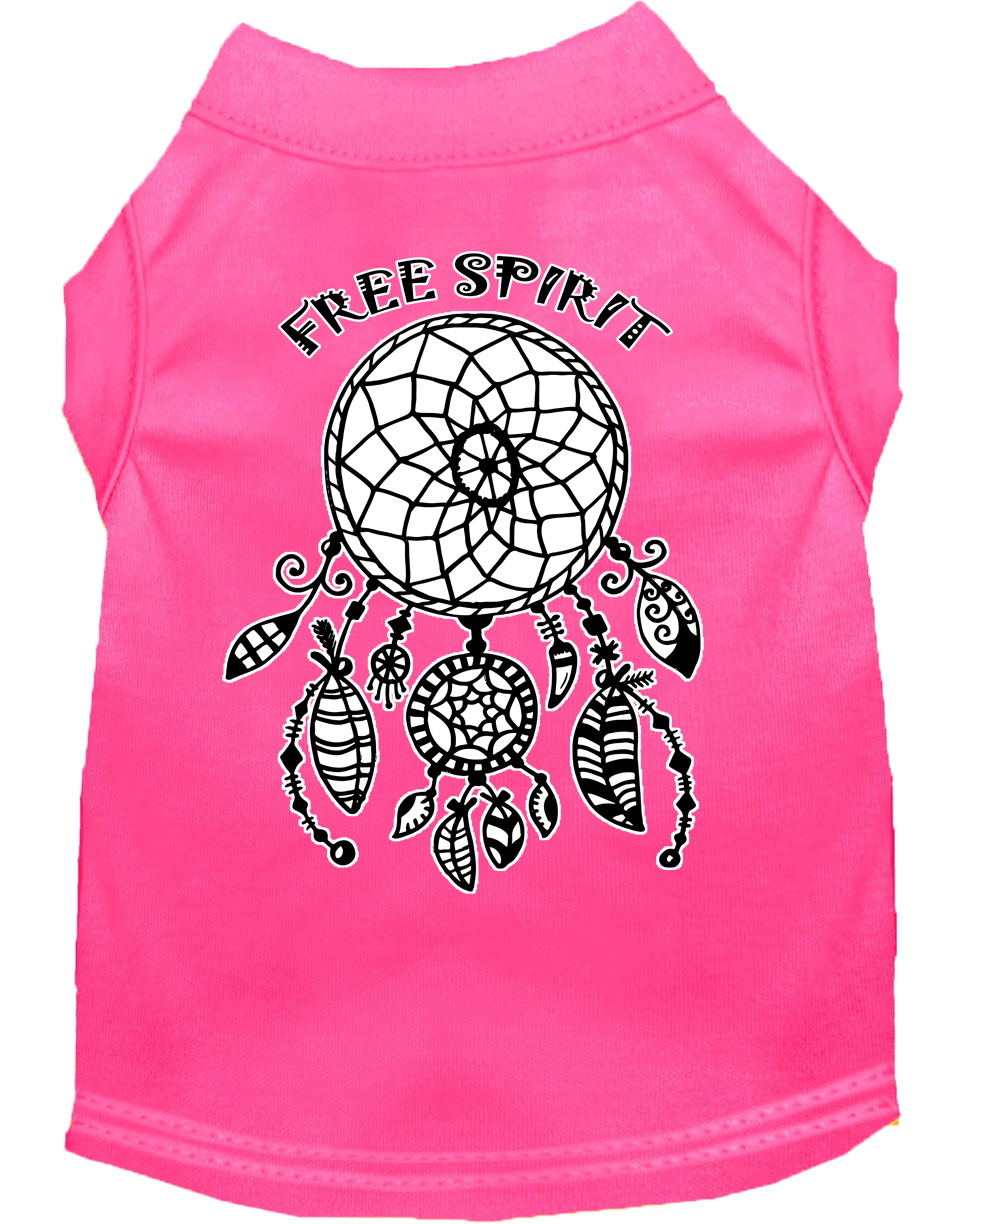 Free Spirit Screen Print Dog Shirt Bright Pink Lg